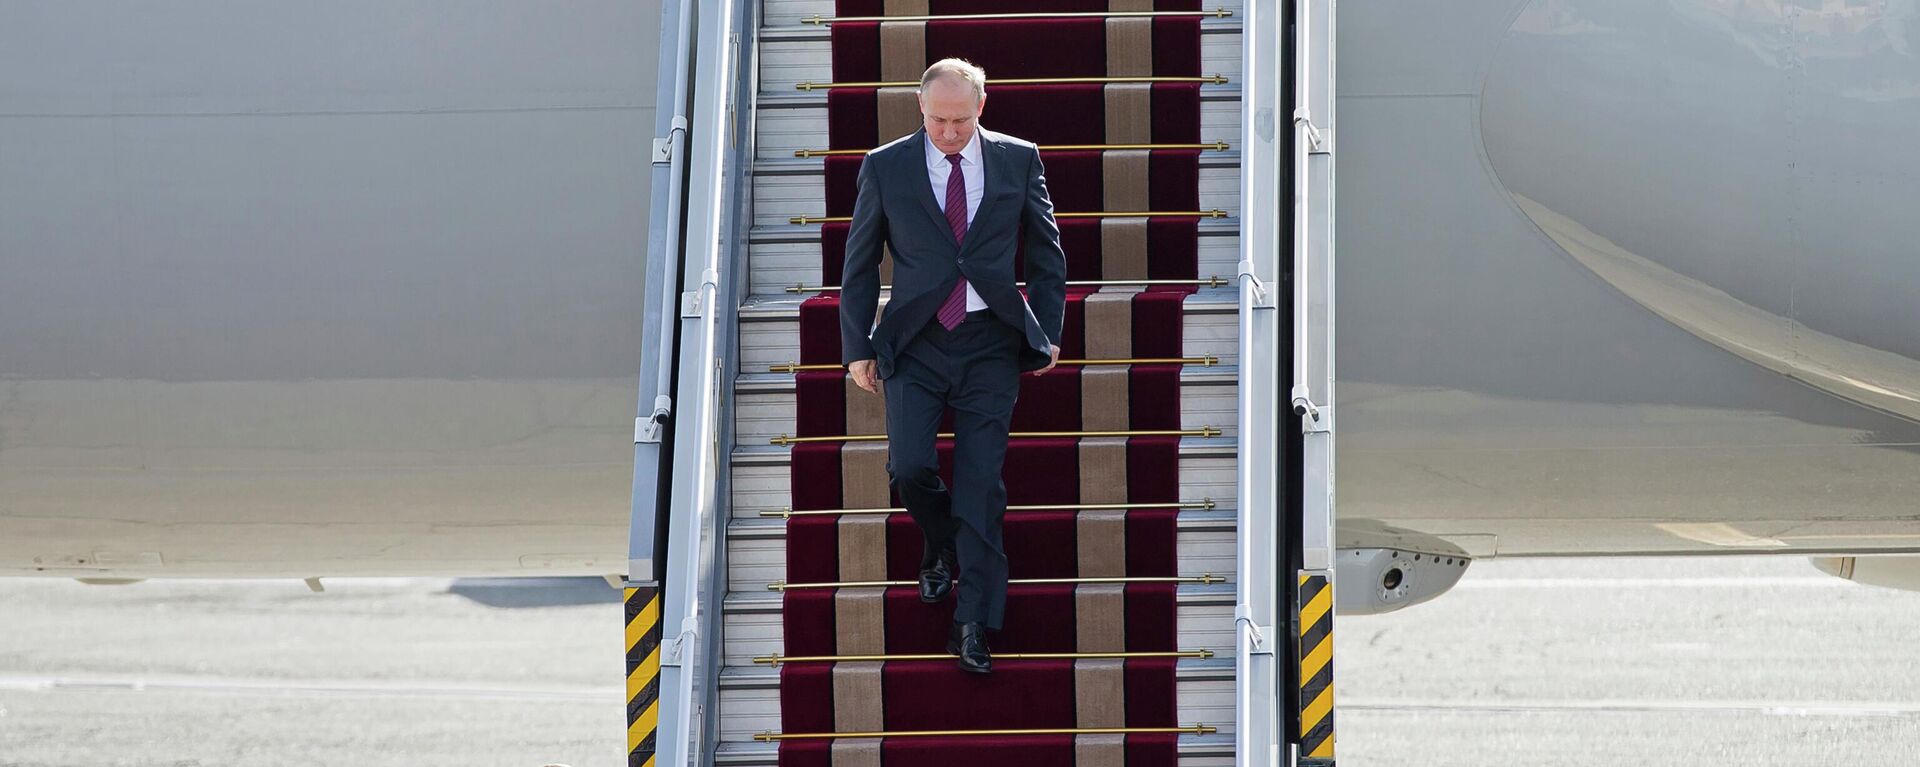 Russian President Vladimir Putin steps down from his plane on his arrival to Mehrabad Airport, in Tehran, Iran, Wednesday, Nov. 1, 2017 - Sputnik International, 1920, 19.07.2022